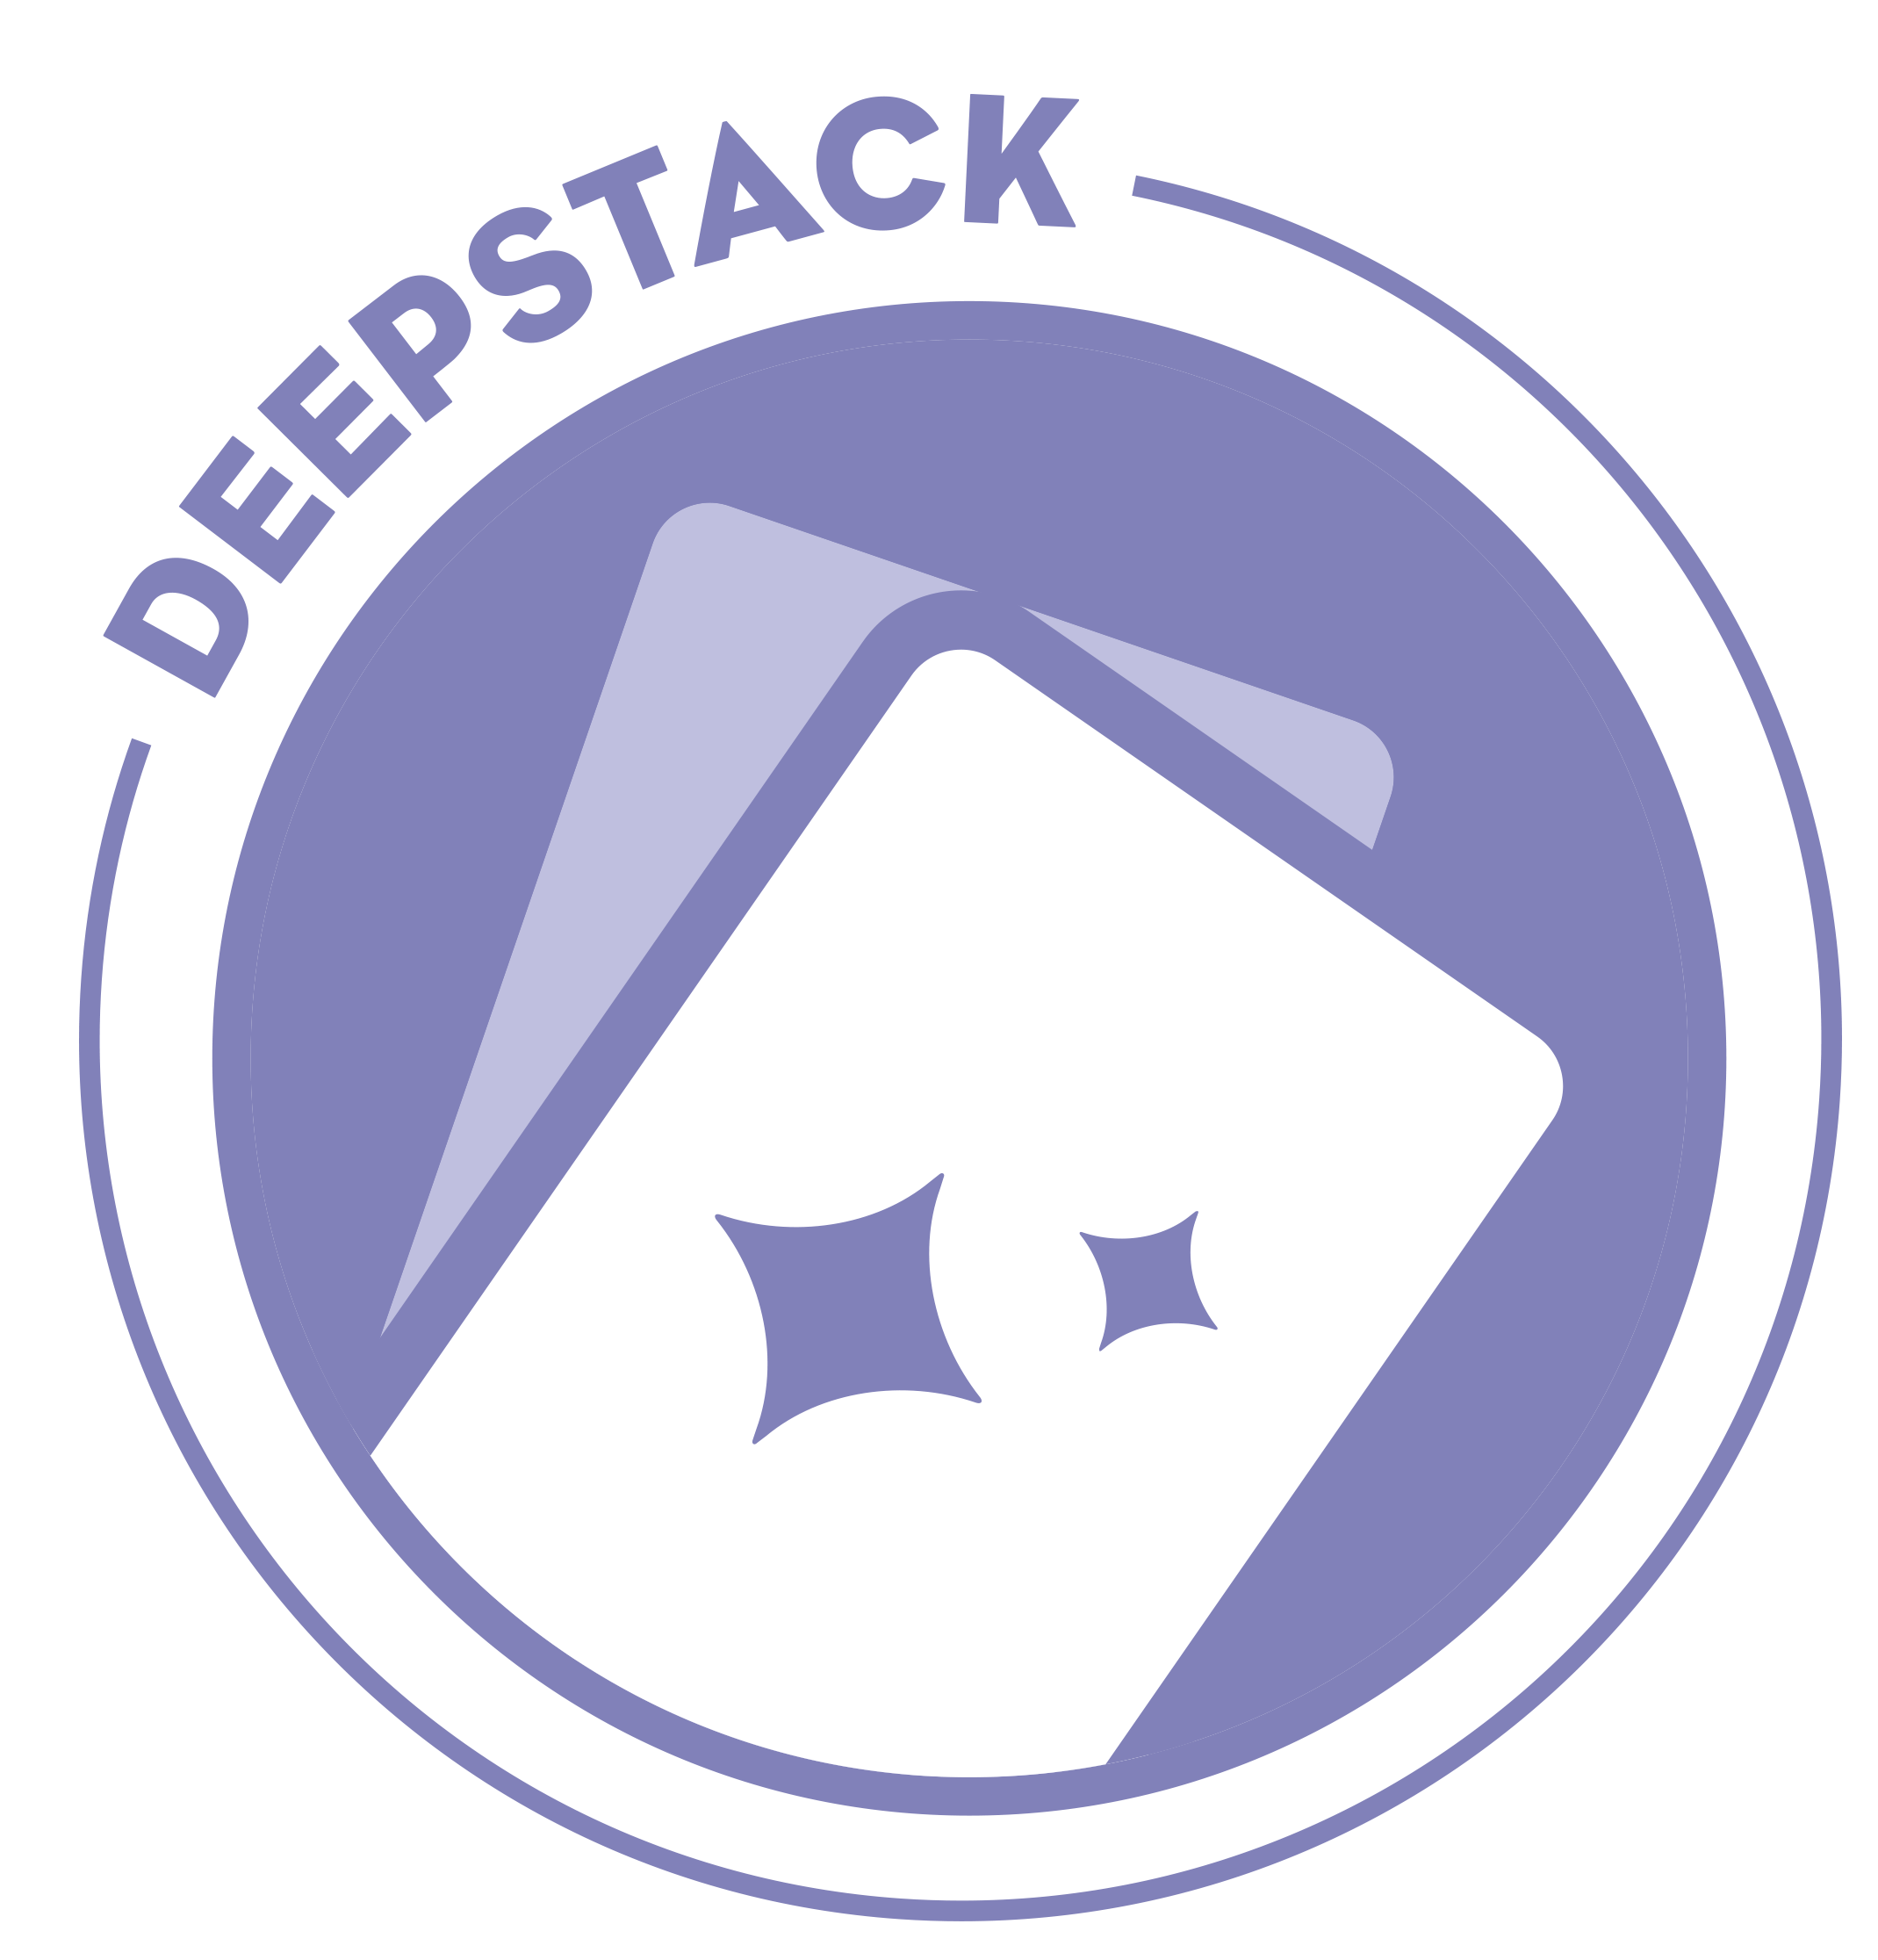 Deepstack